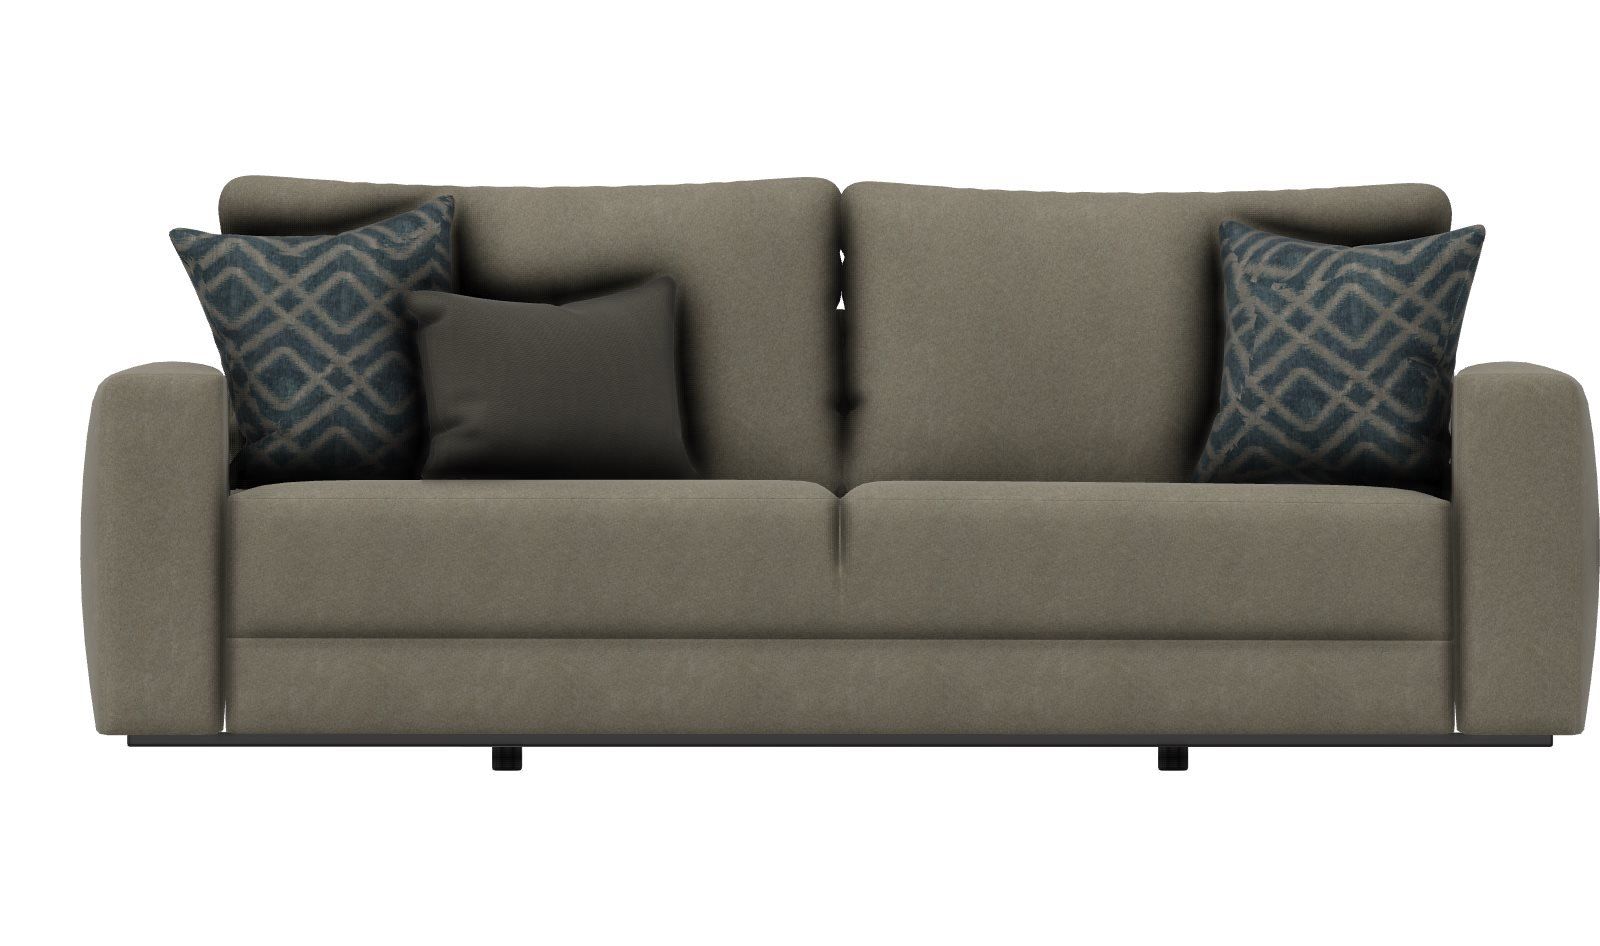 Carino 3-Seat Sofa Bed w/Storage